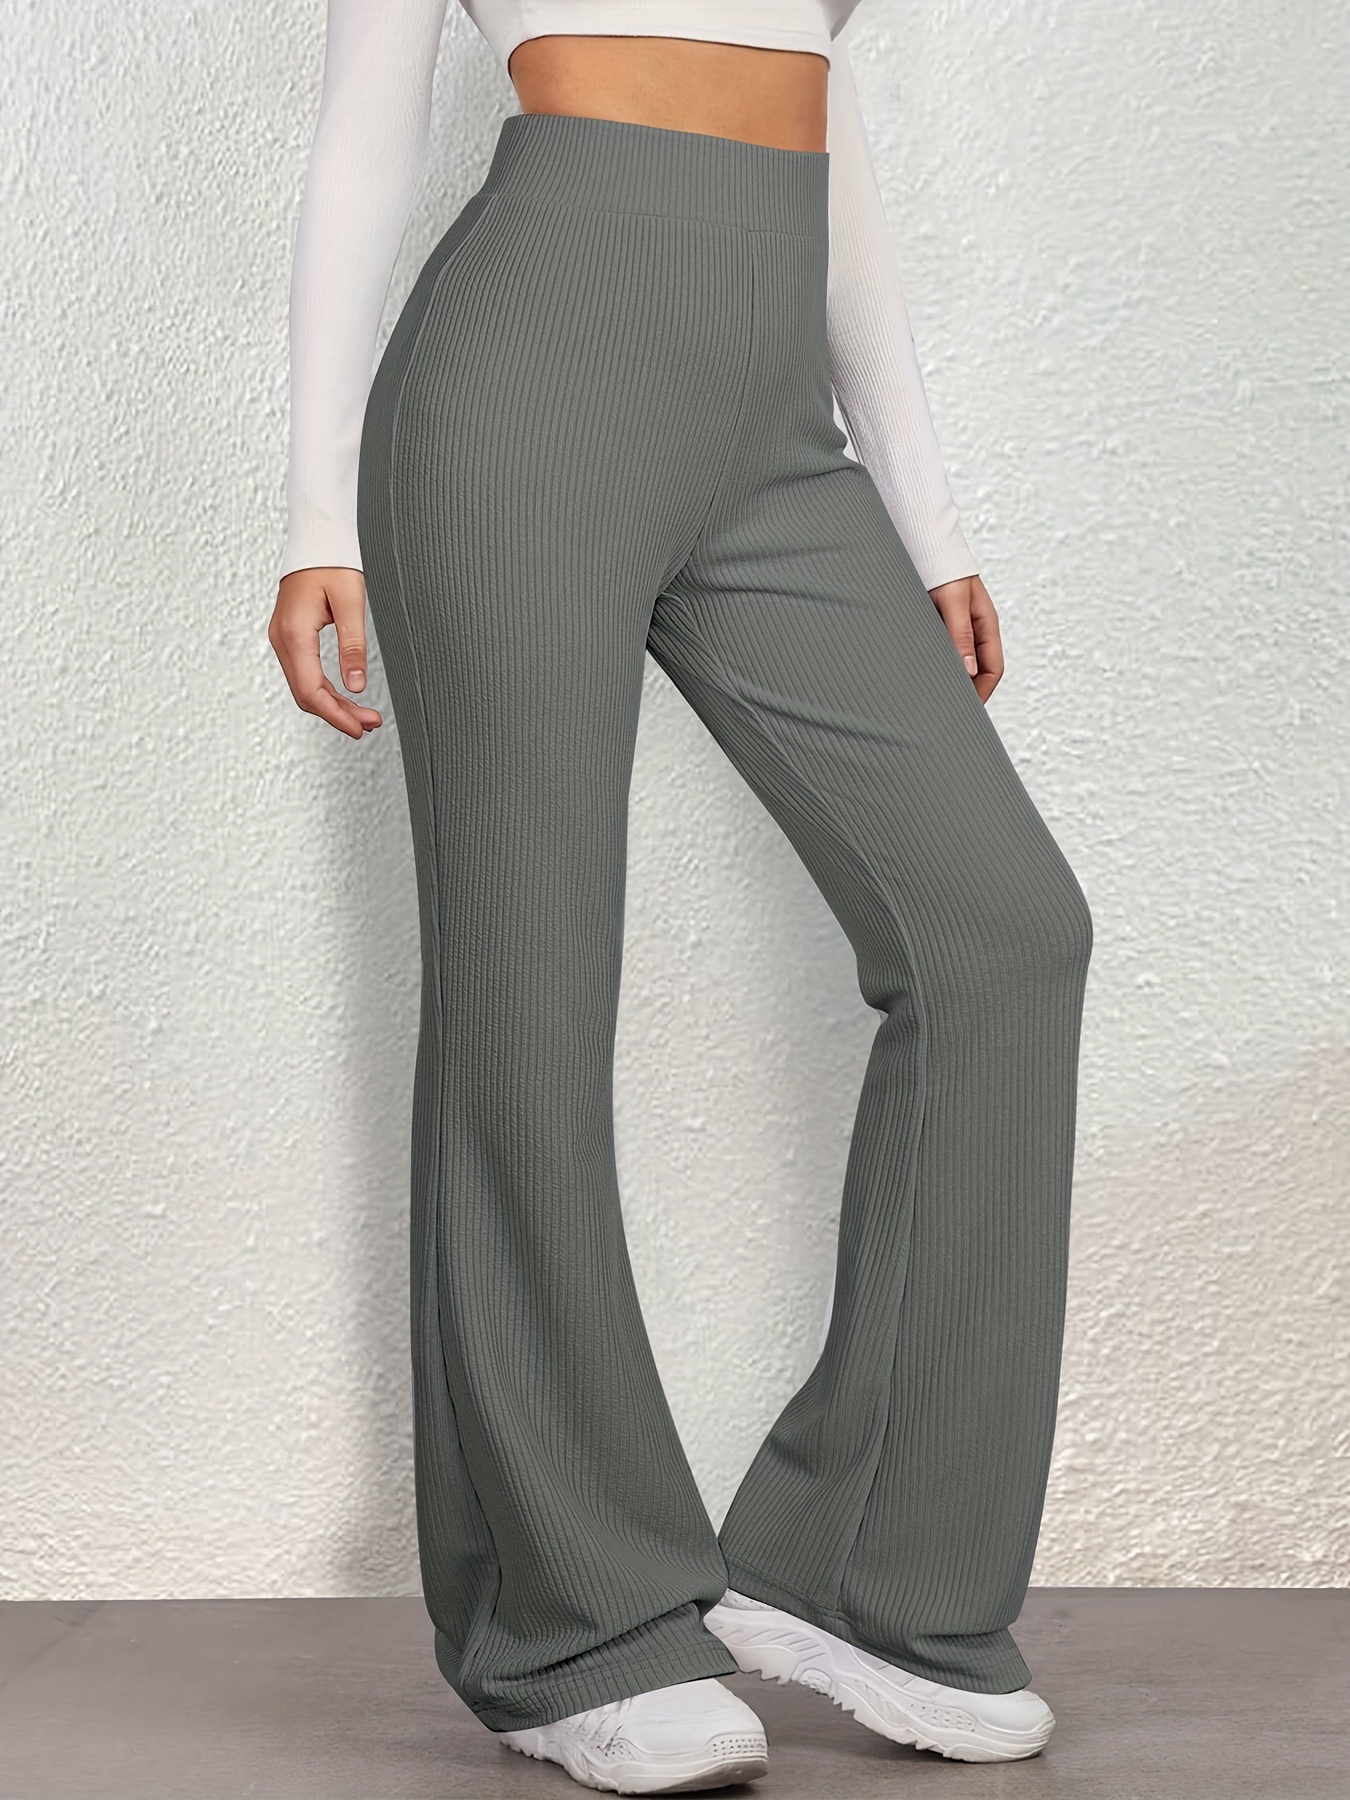 Pantalones Casuales Para Mujer  Compra Online Pantalones Casuales Para  Mujer en Punto Blanco®